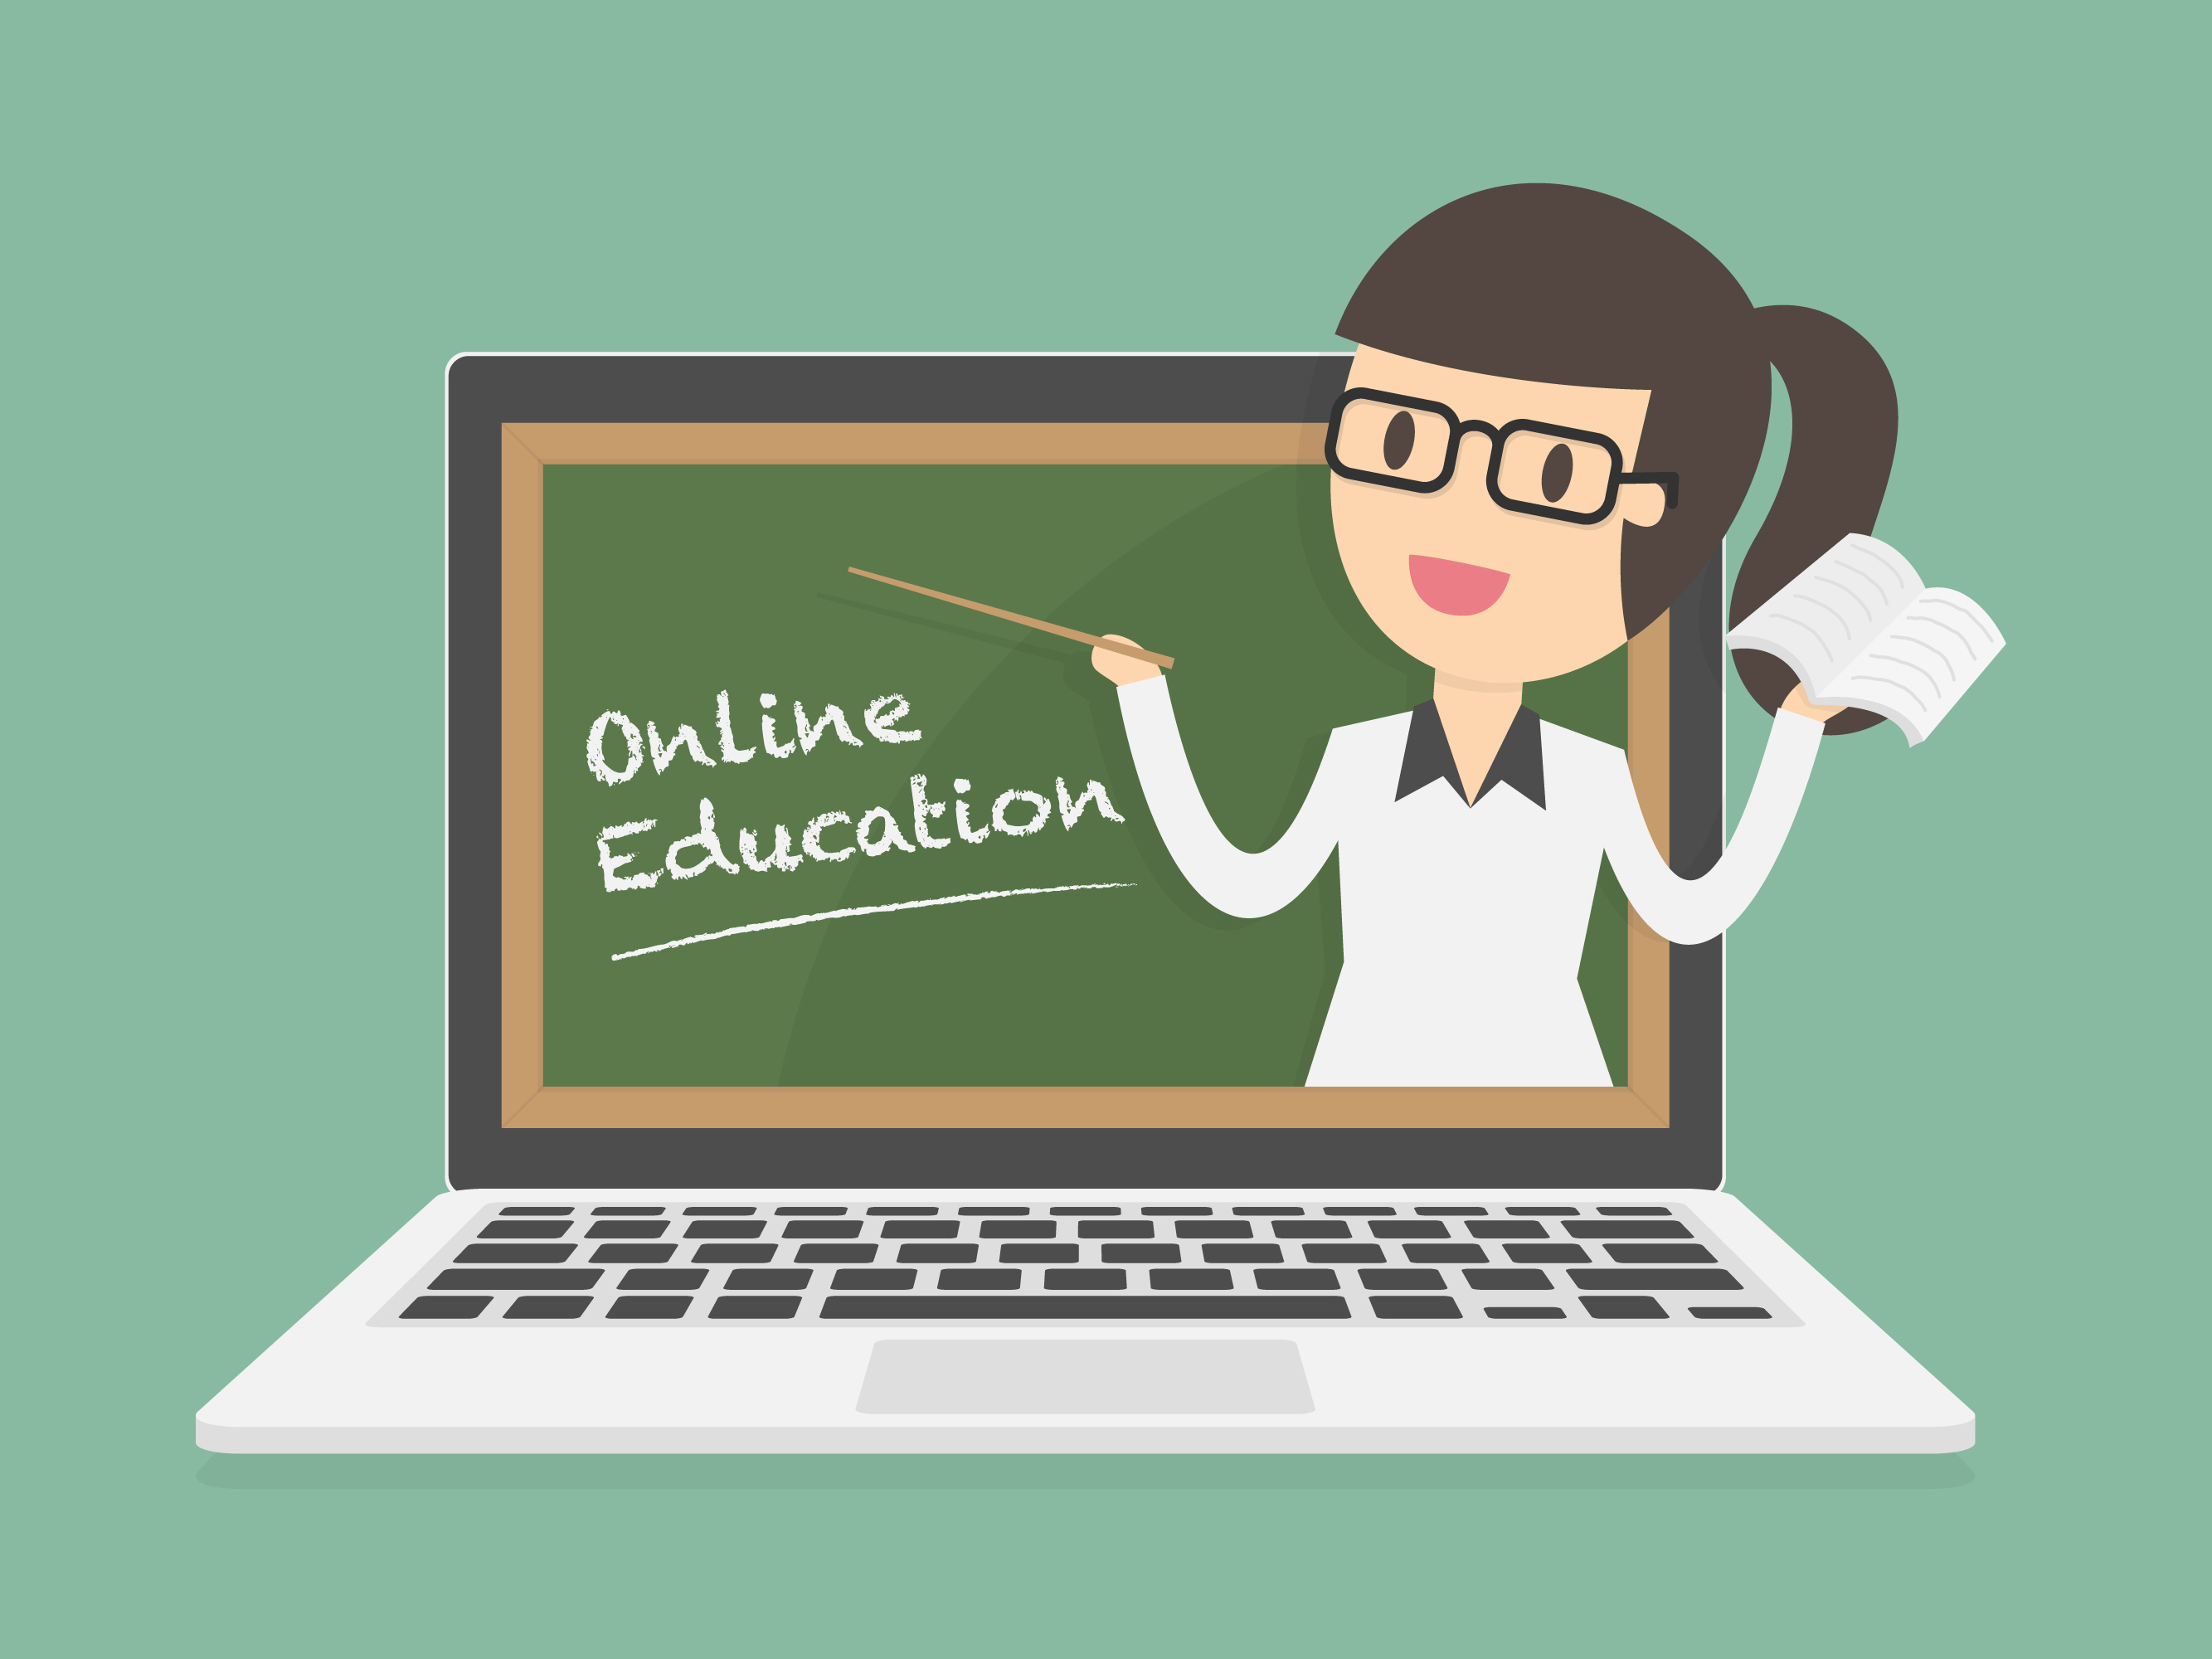 Imagen "Online education on laptop" diseñada por Dooder en Freepik